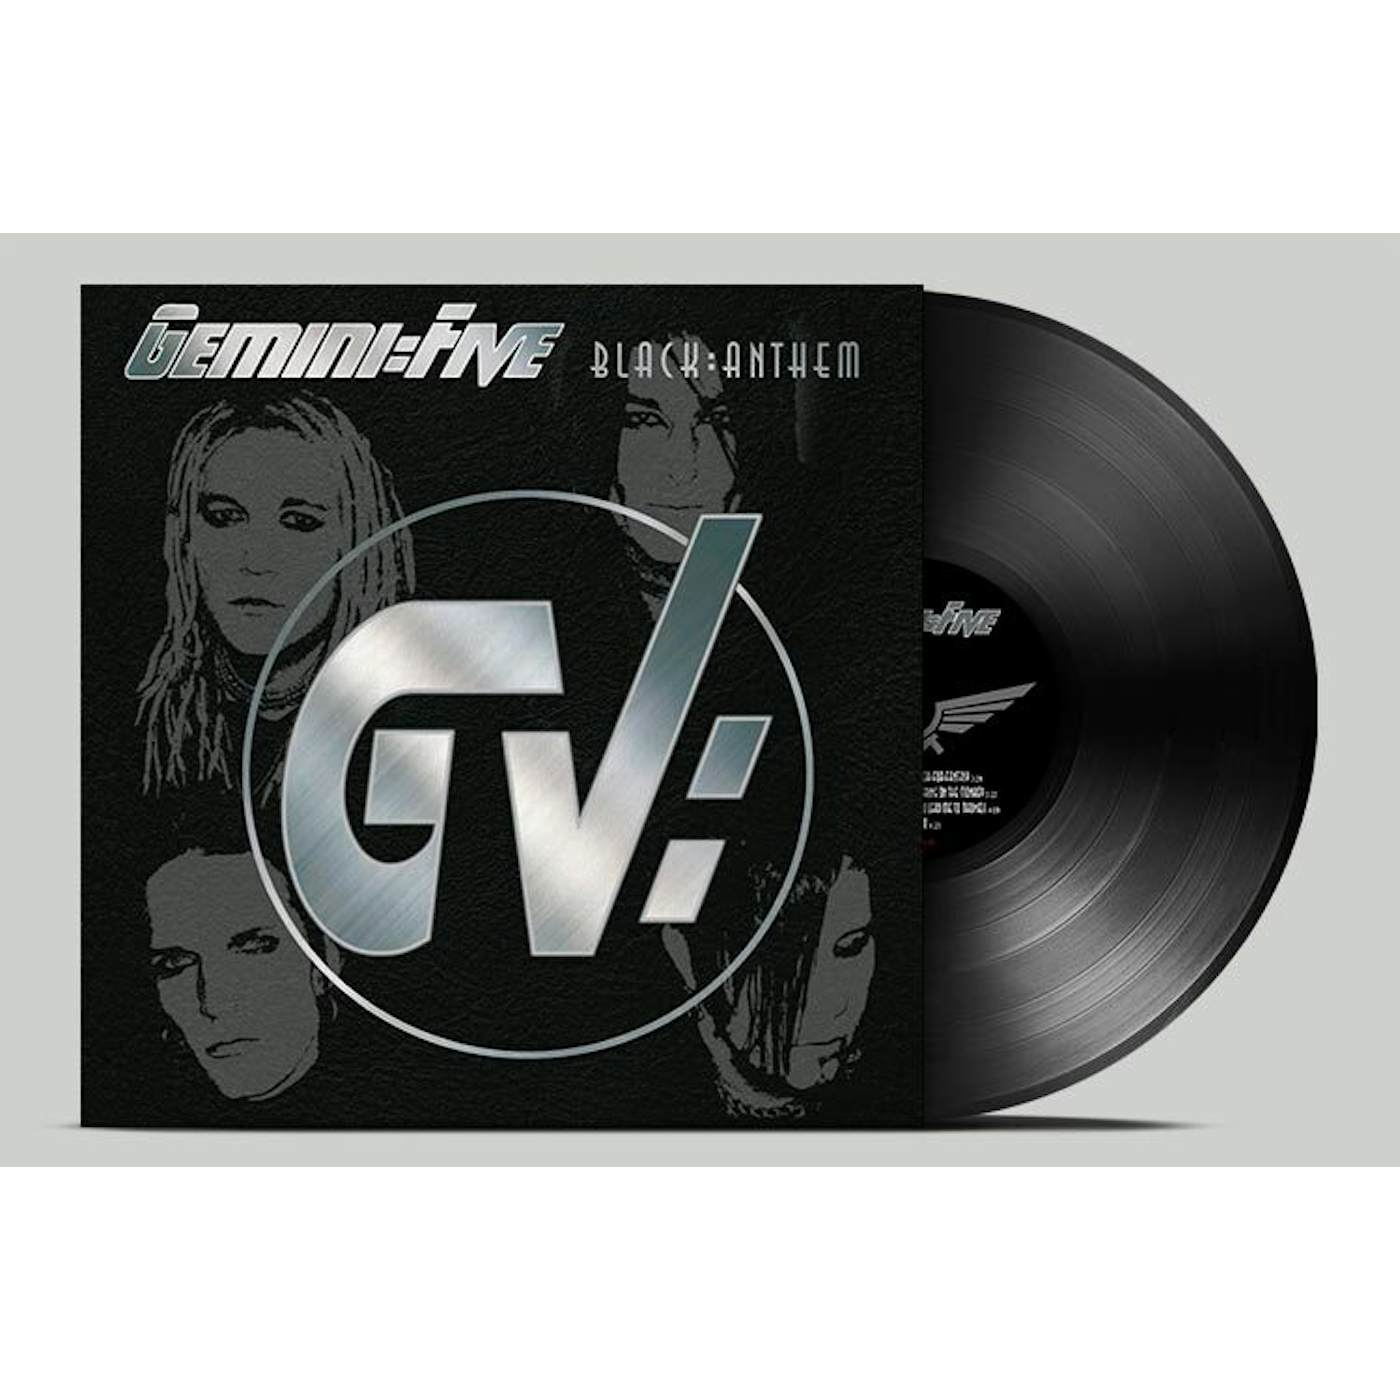 Gemini Five Black Anthem Vinyl Record